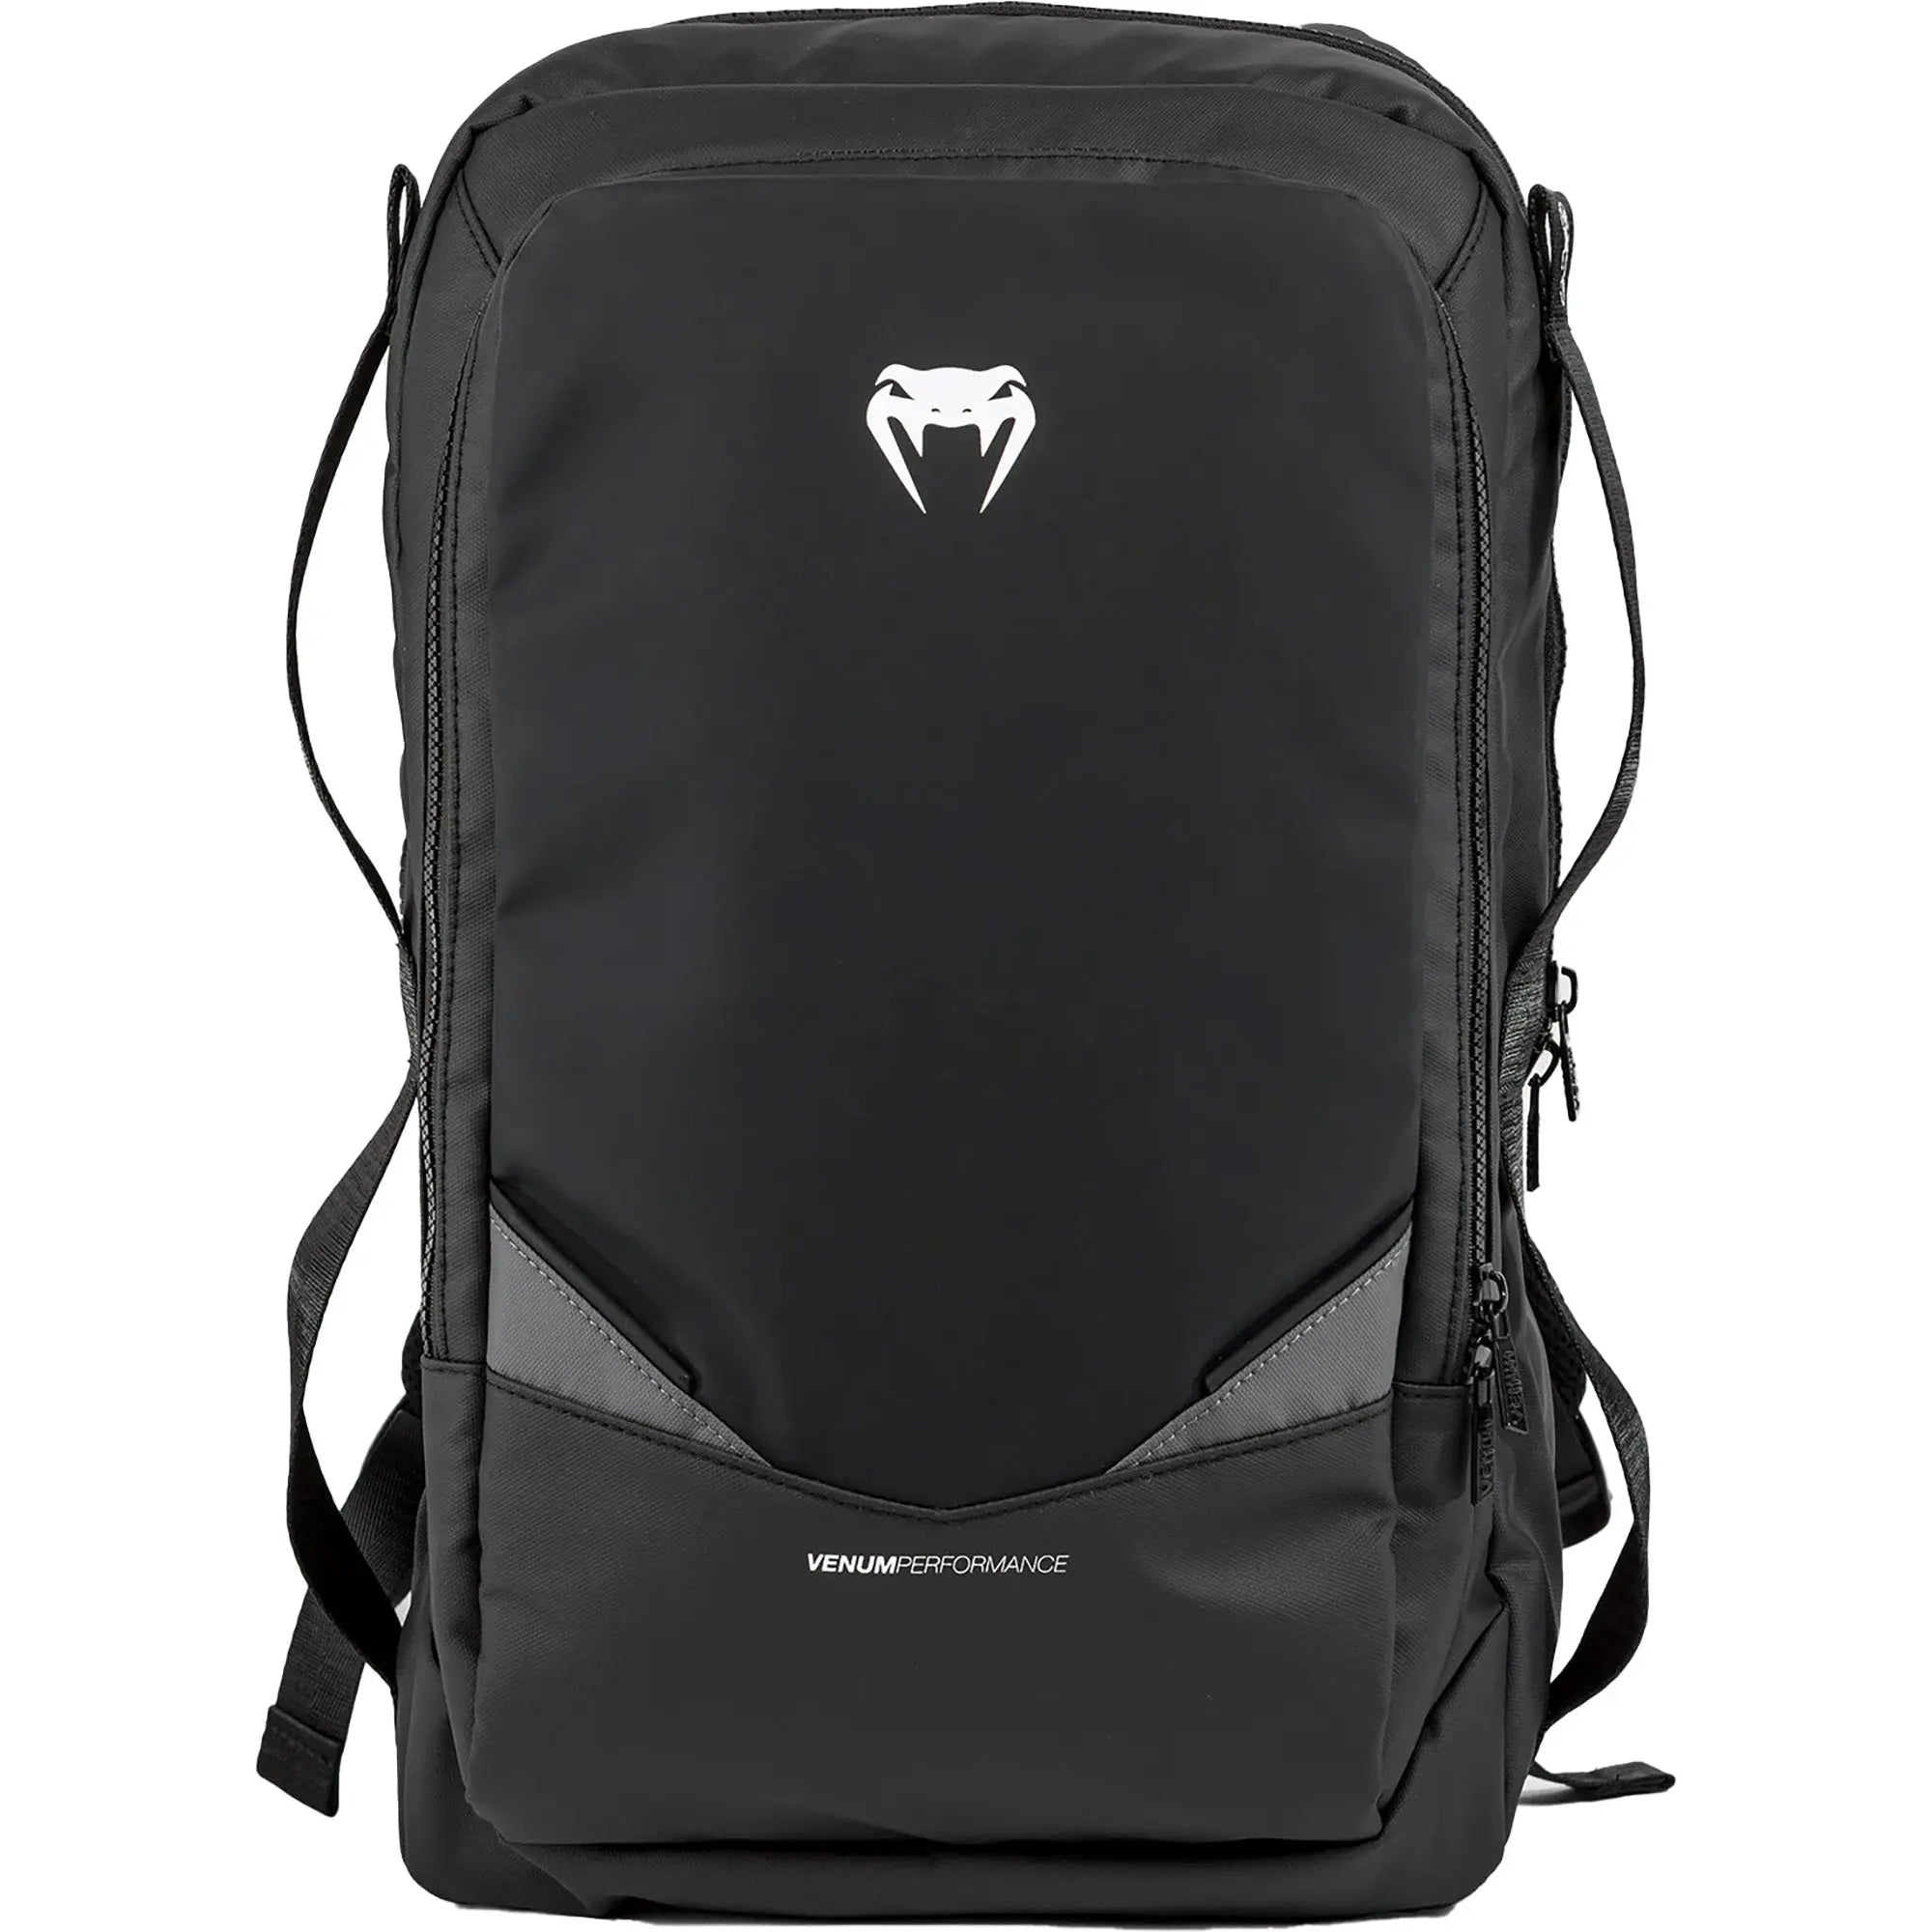 Venum Evo 2 Gym Backpack - Black/Gray Venum